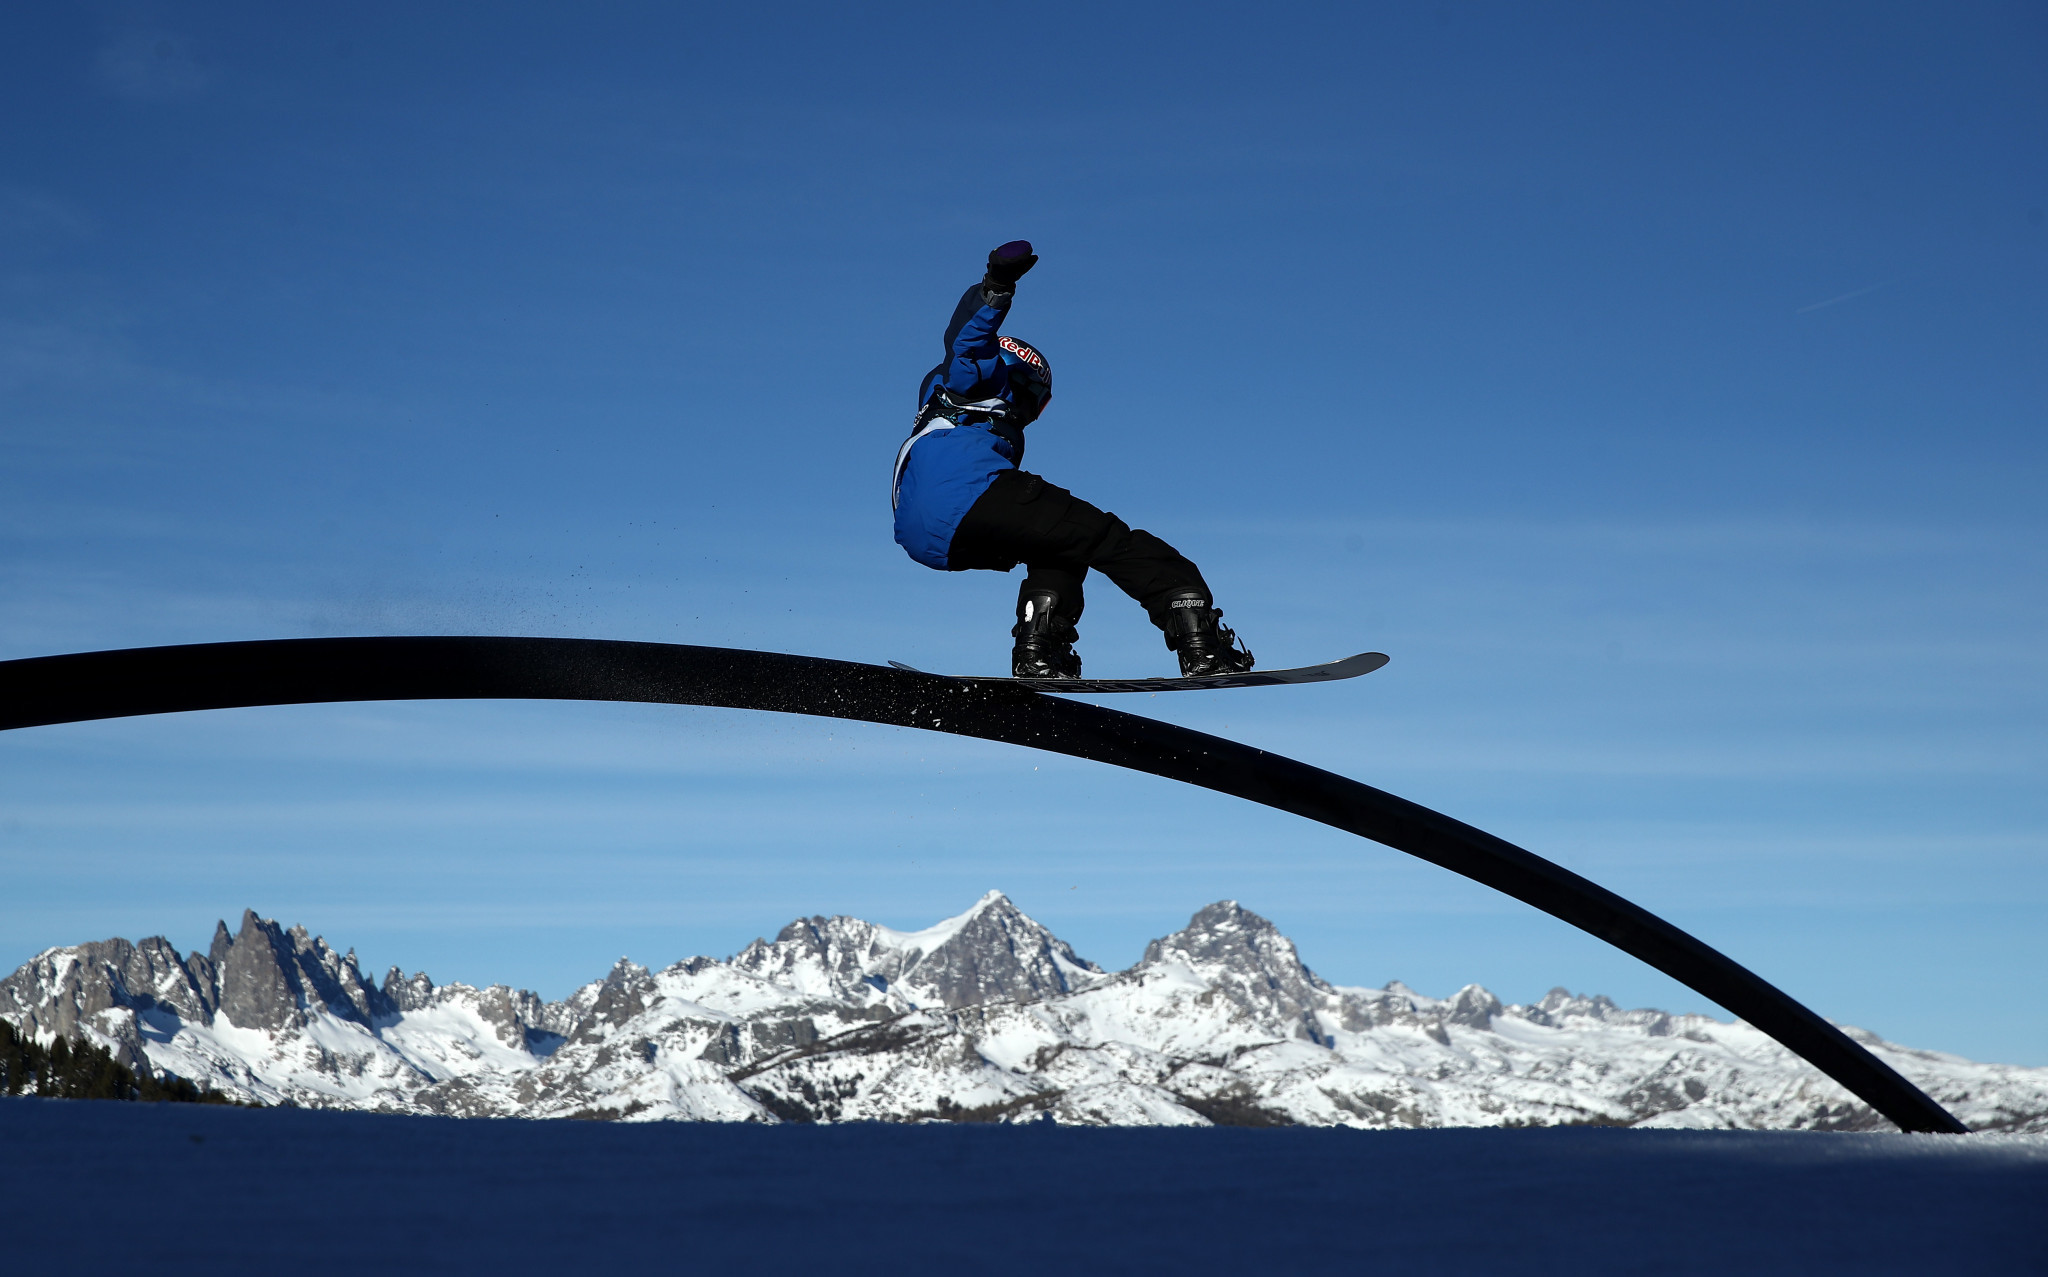 Luke Winkelmann won the men's slopestyle qualification at the Snowboard World Cup in Špindlerův Mlýn ©Getty Images